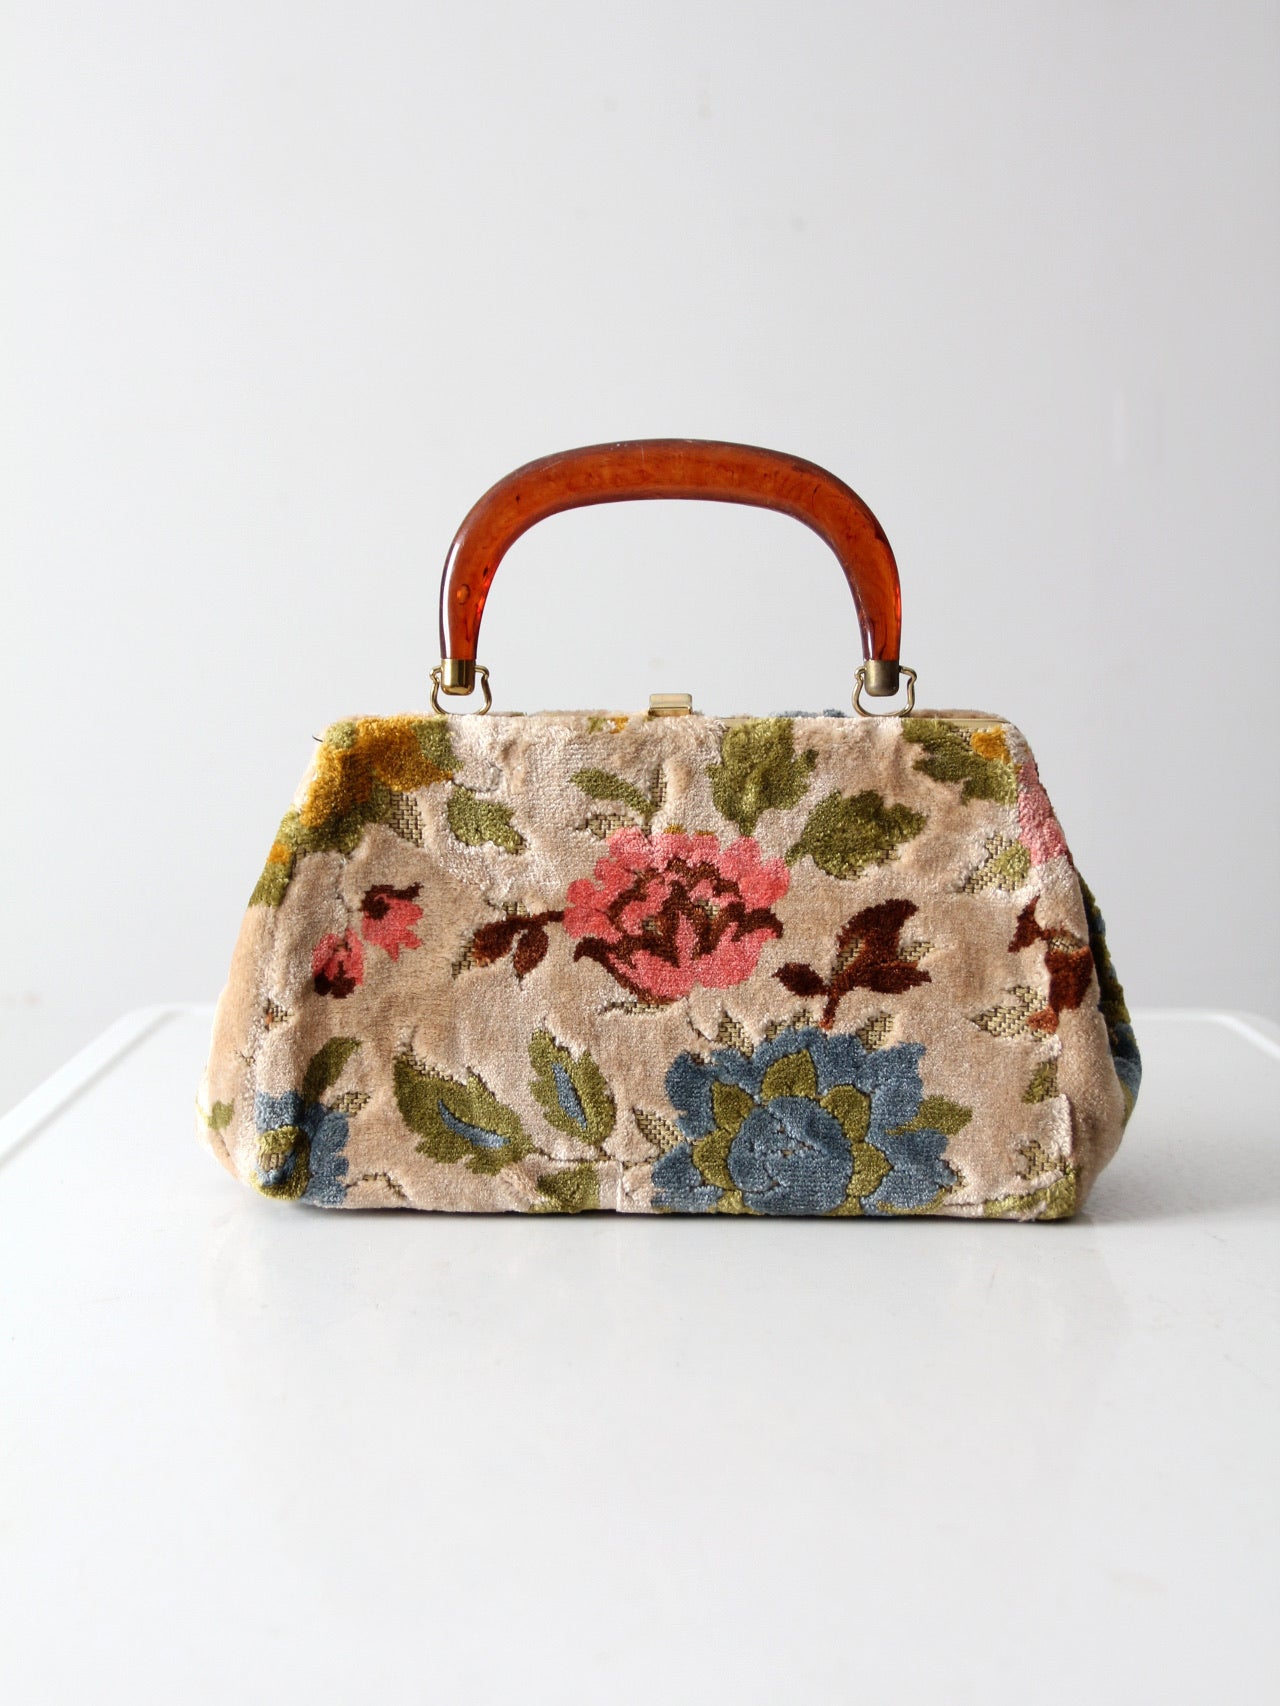 Carpet bag | Carpet bag purse, Bags, Carpet bag